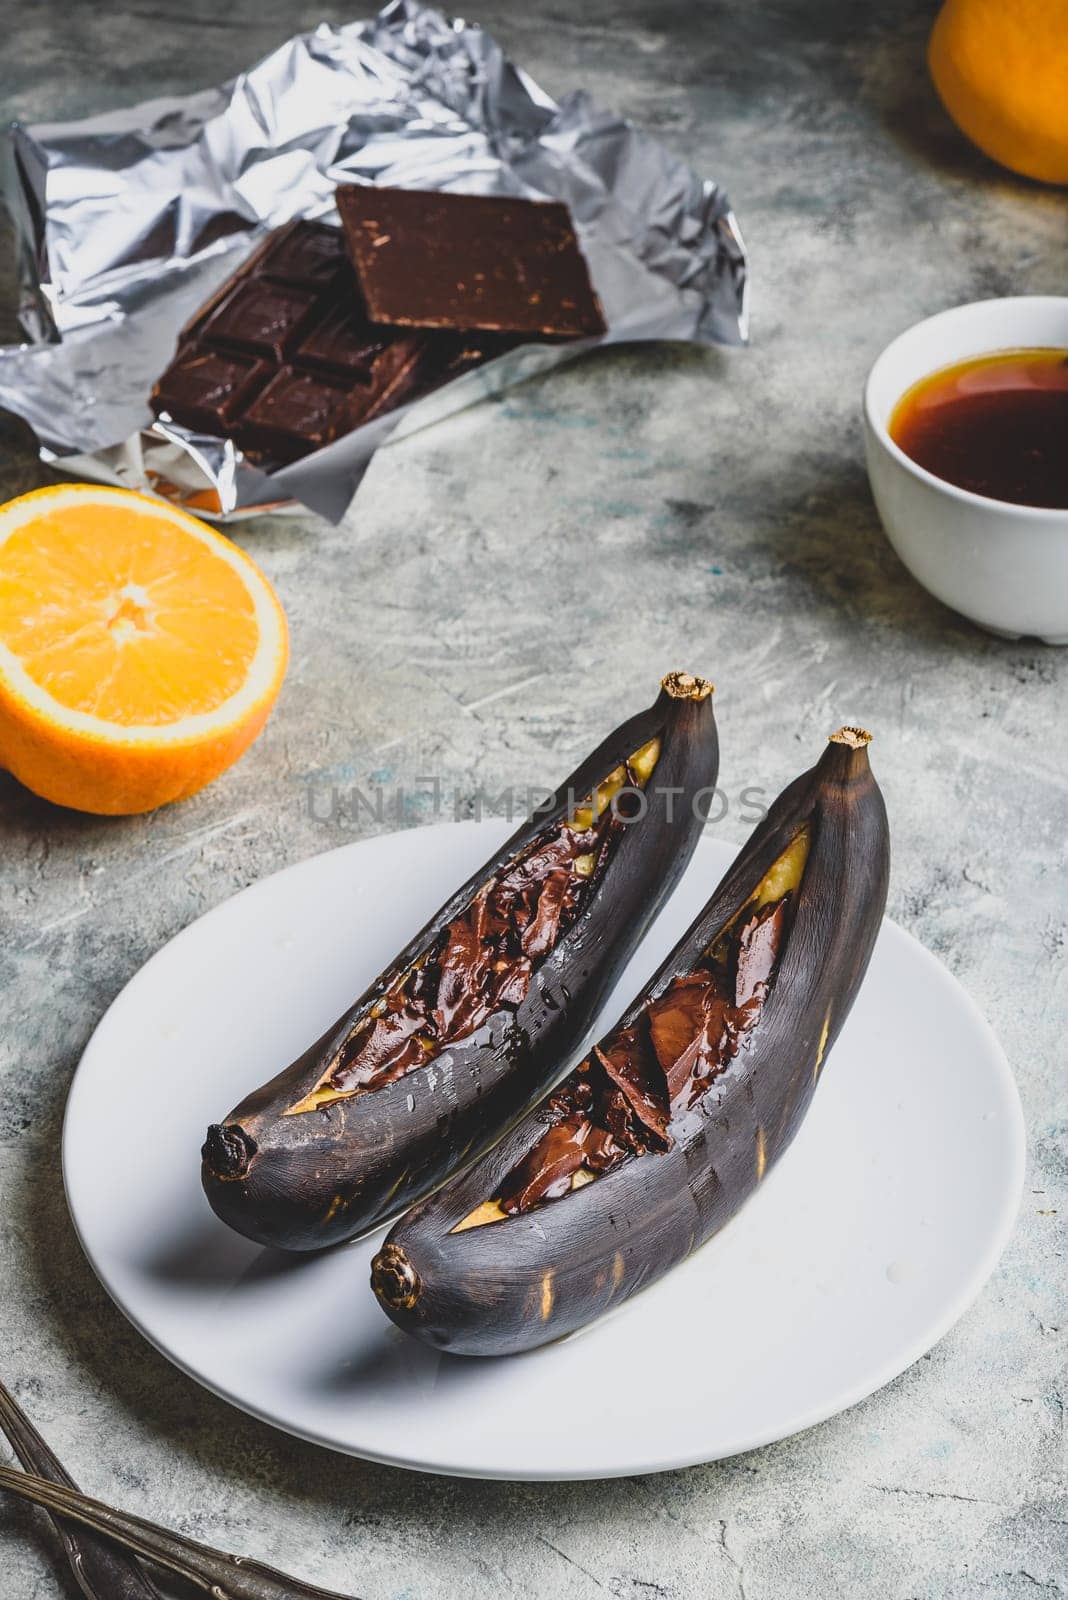 Grilled bananas with dark chocolate by Seva_blsv